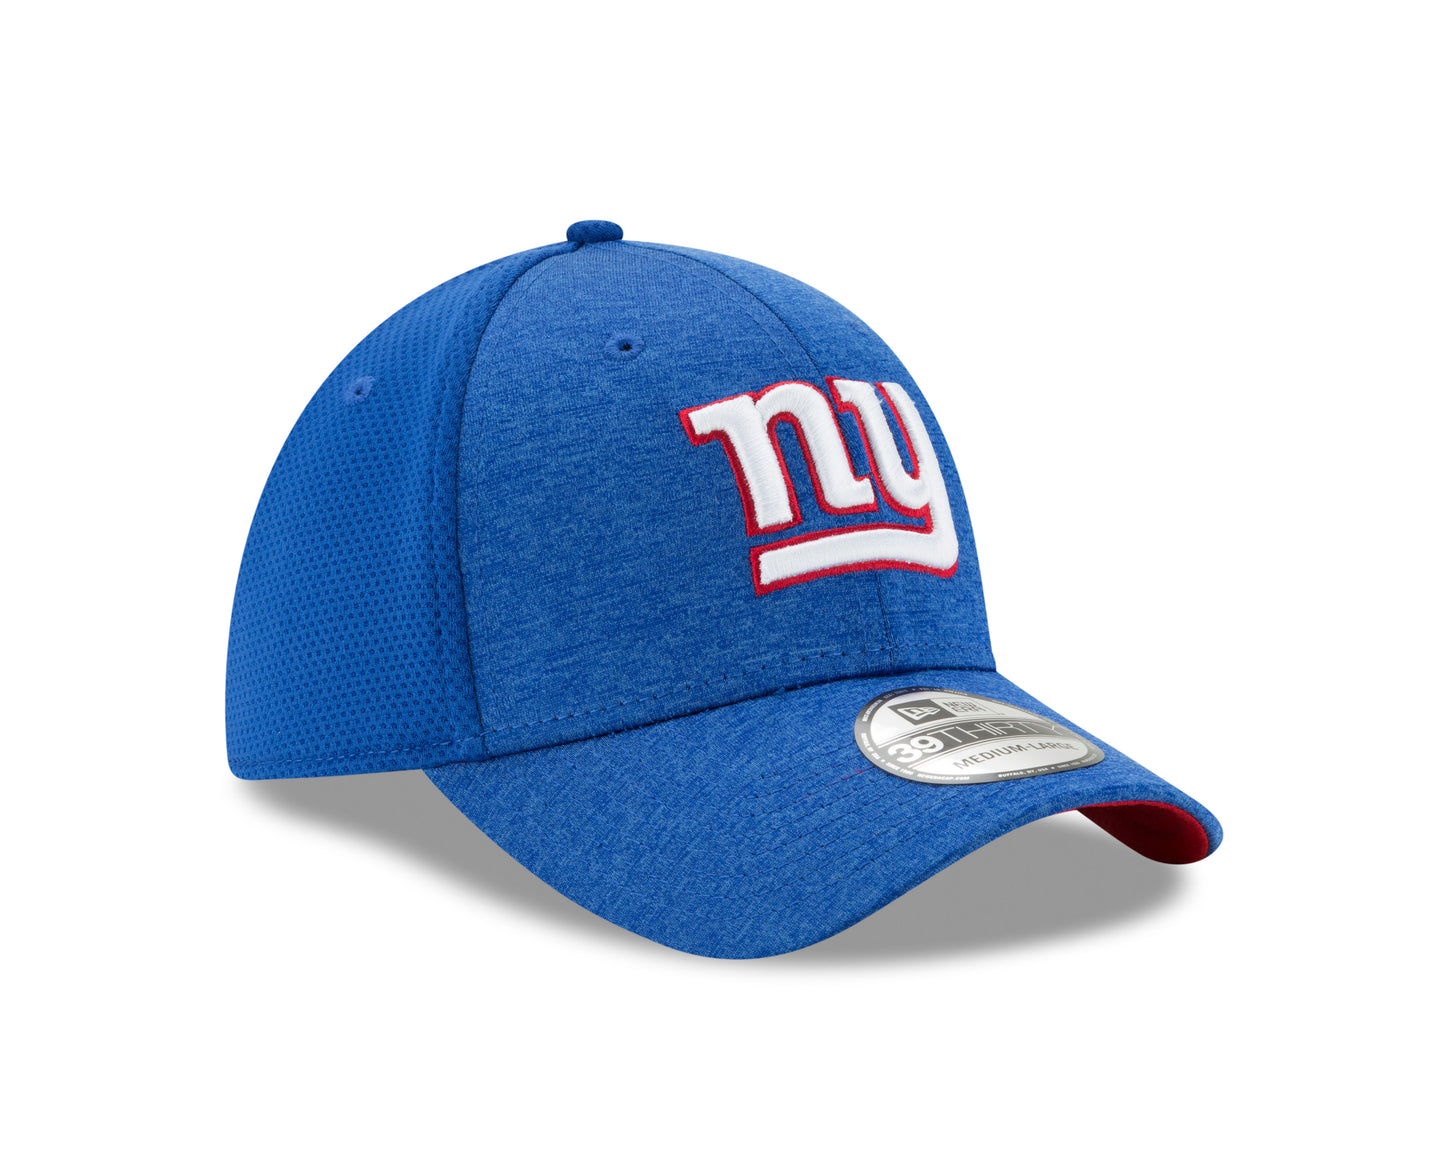 New York Giants New Era Shadowed Team 39THIRTY Flex Hat - Royal